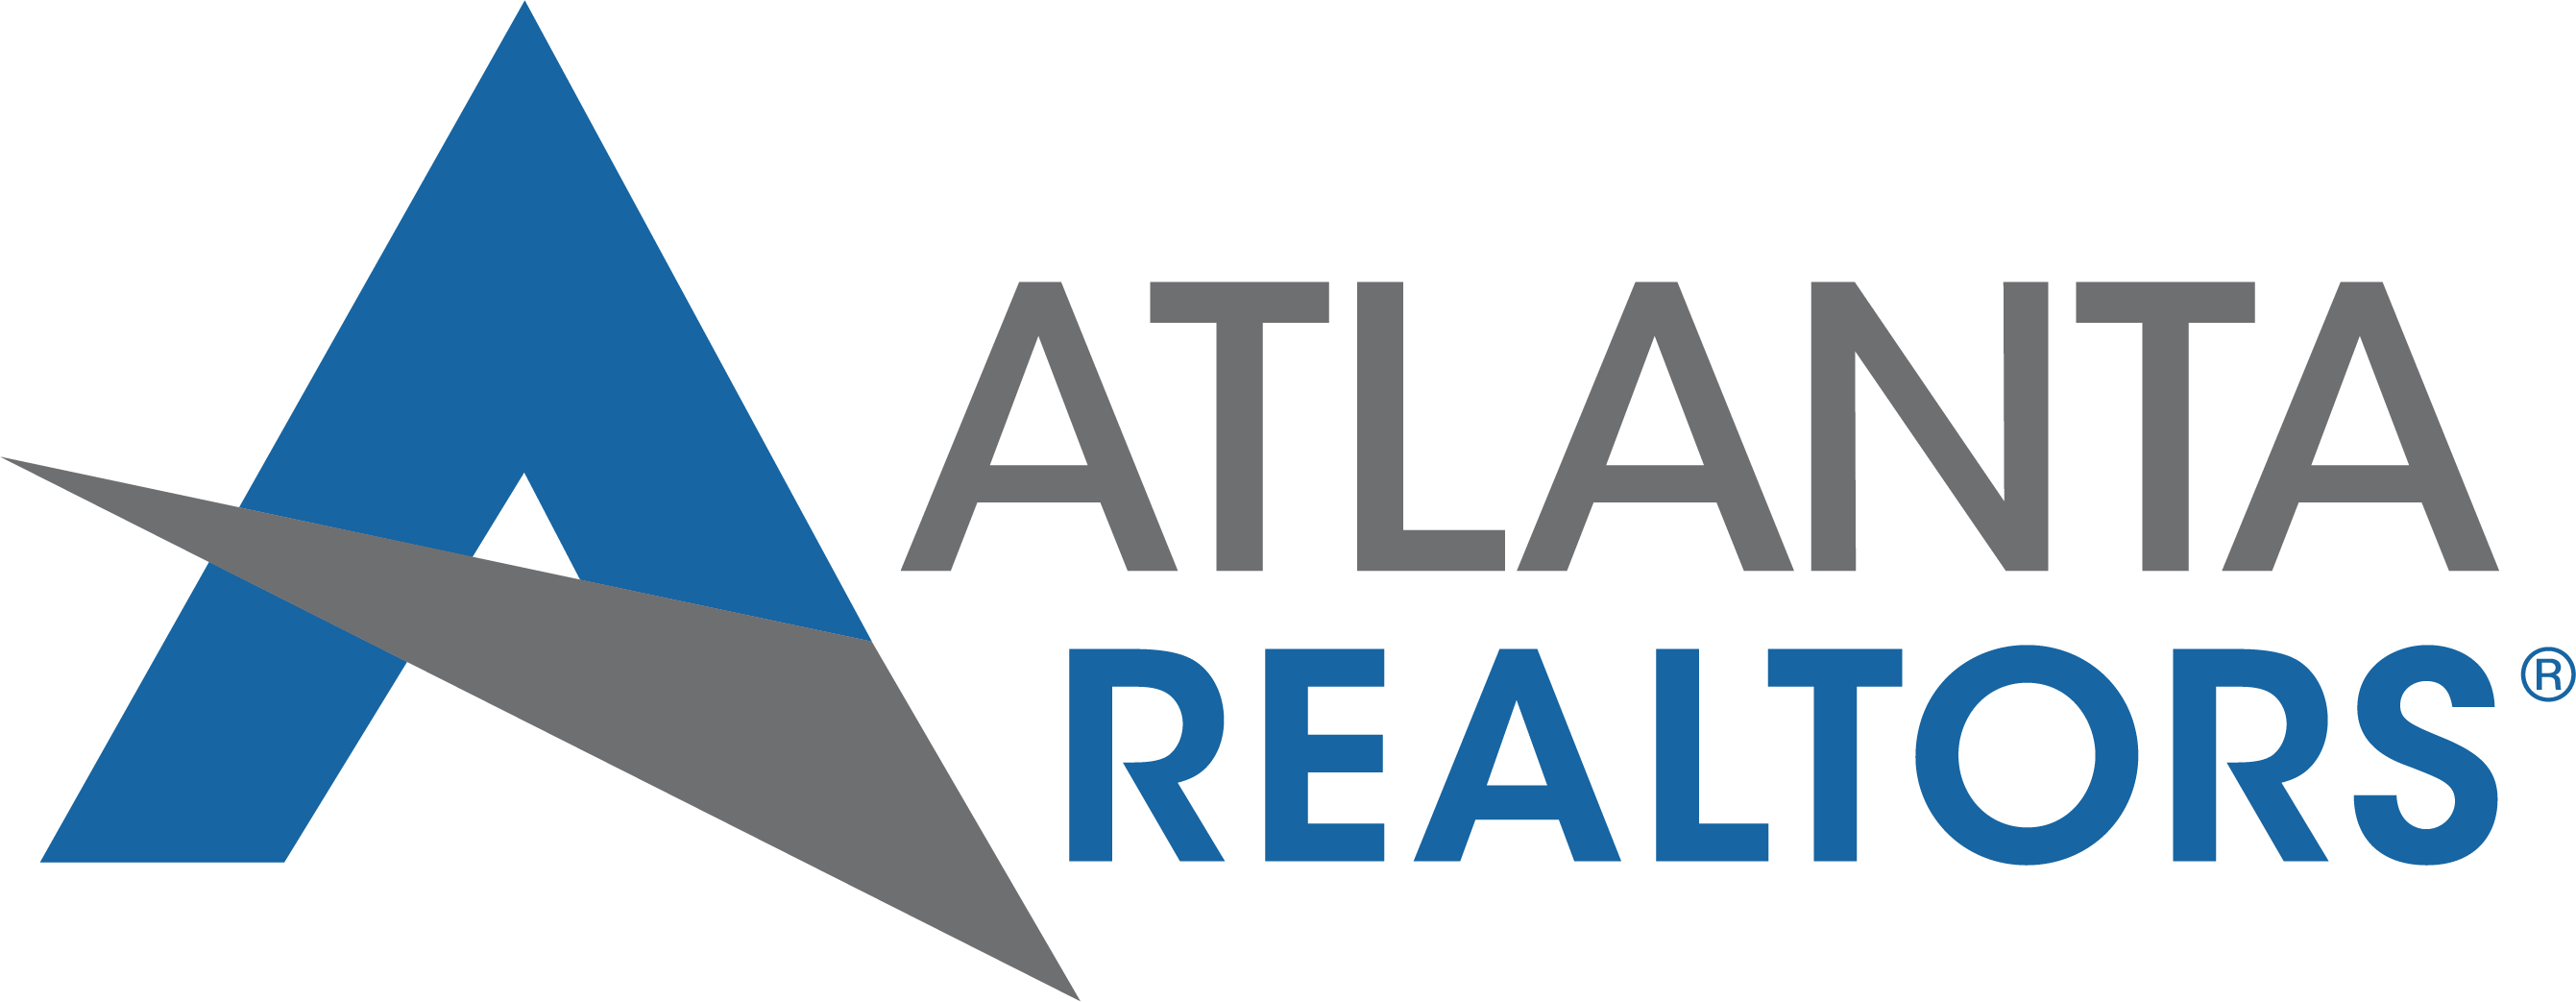 Atlanta REALTORS Association